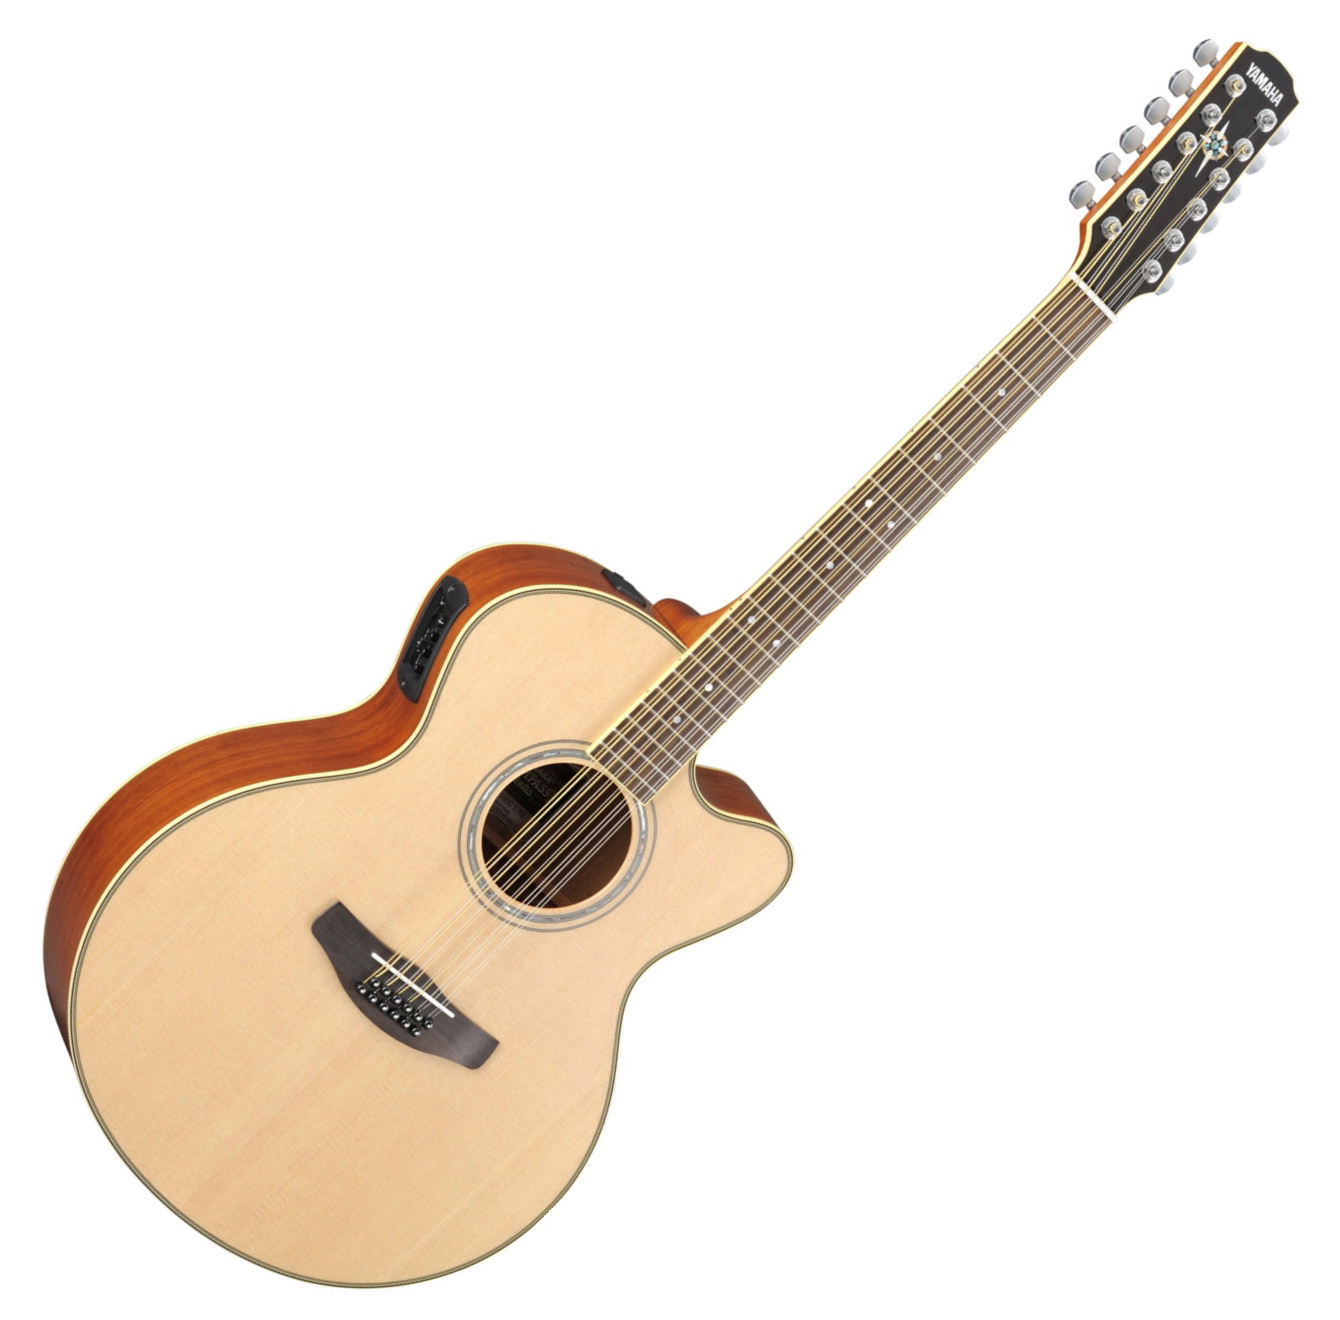 Двенадцатиструнная гитара Yamaha CPX-700II-12